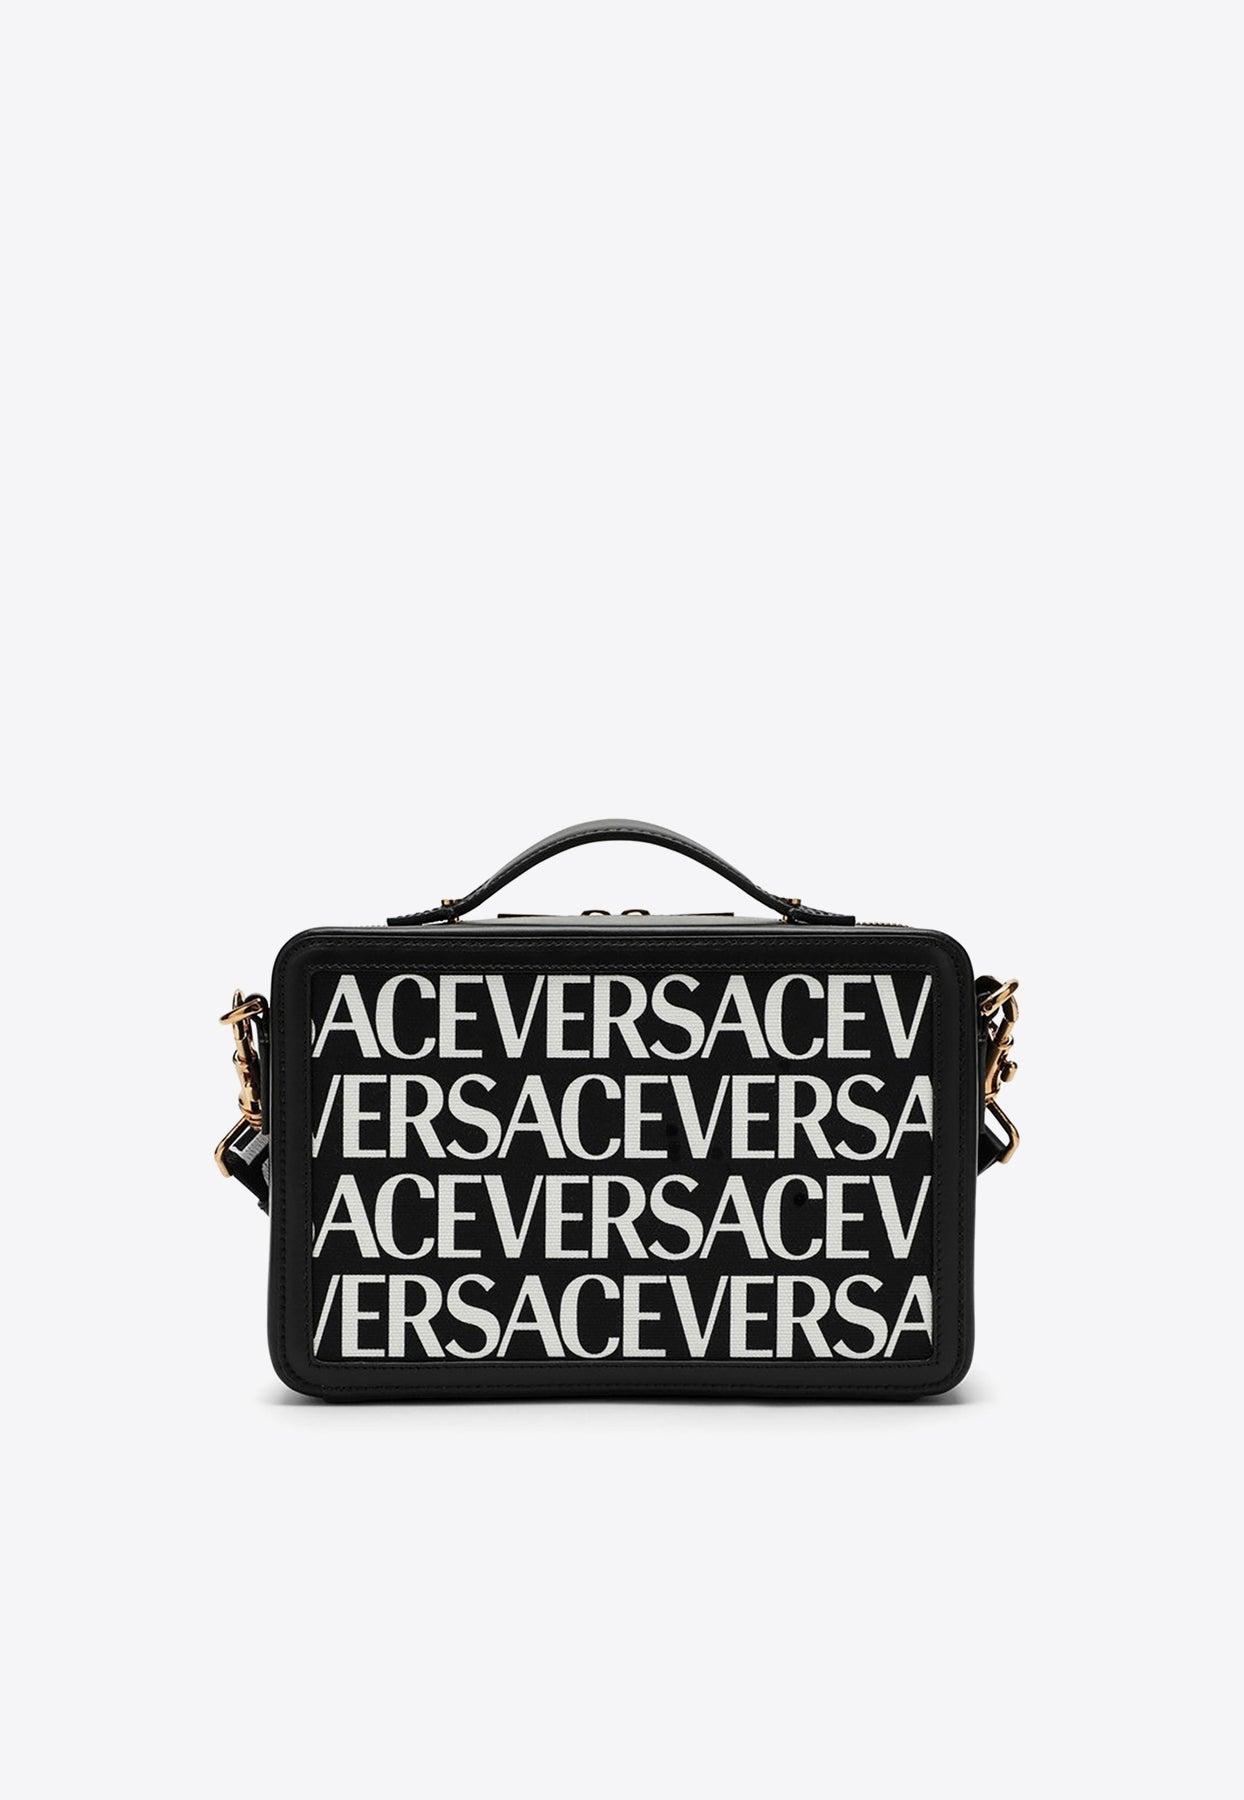 Versace Versace Allover cross-body bag